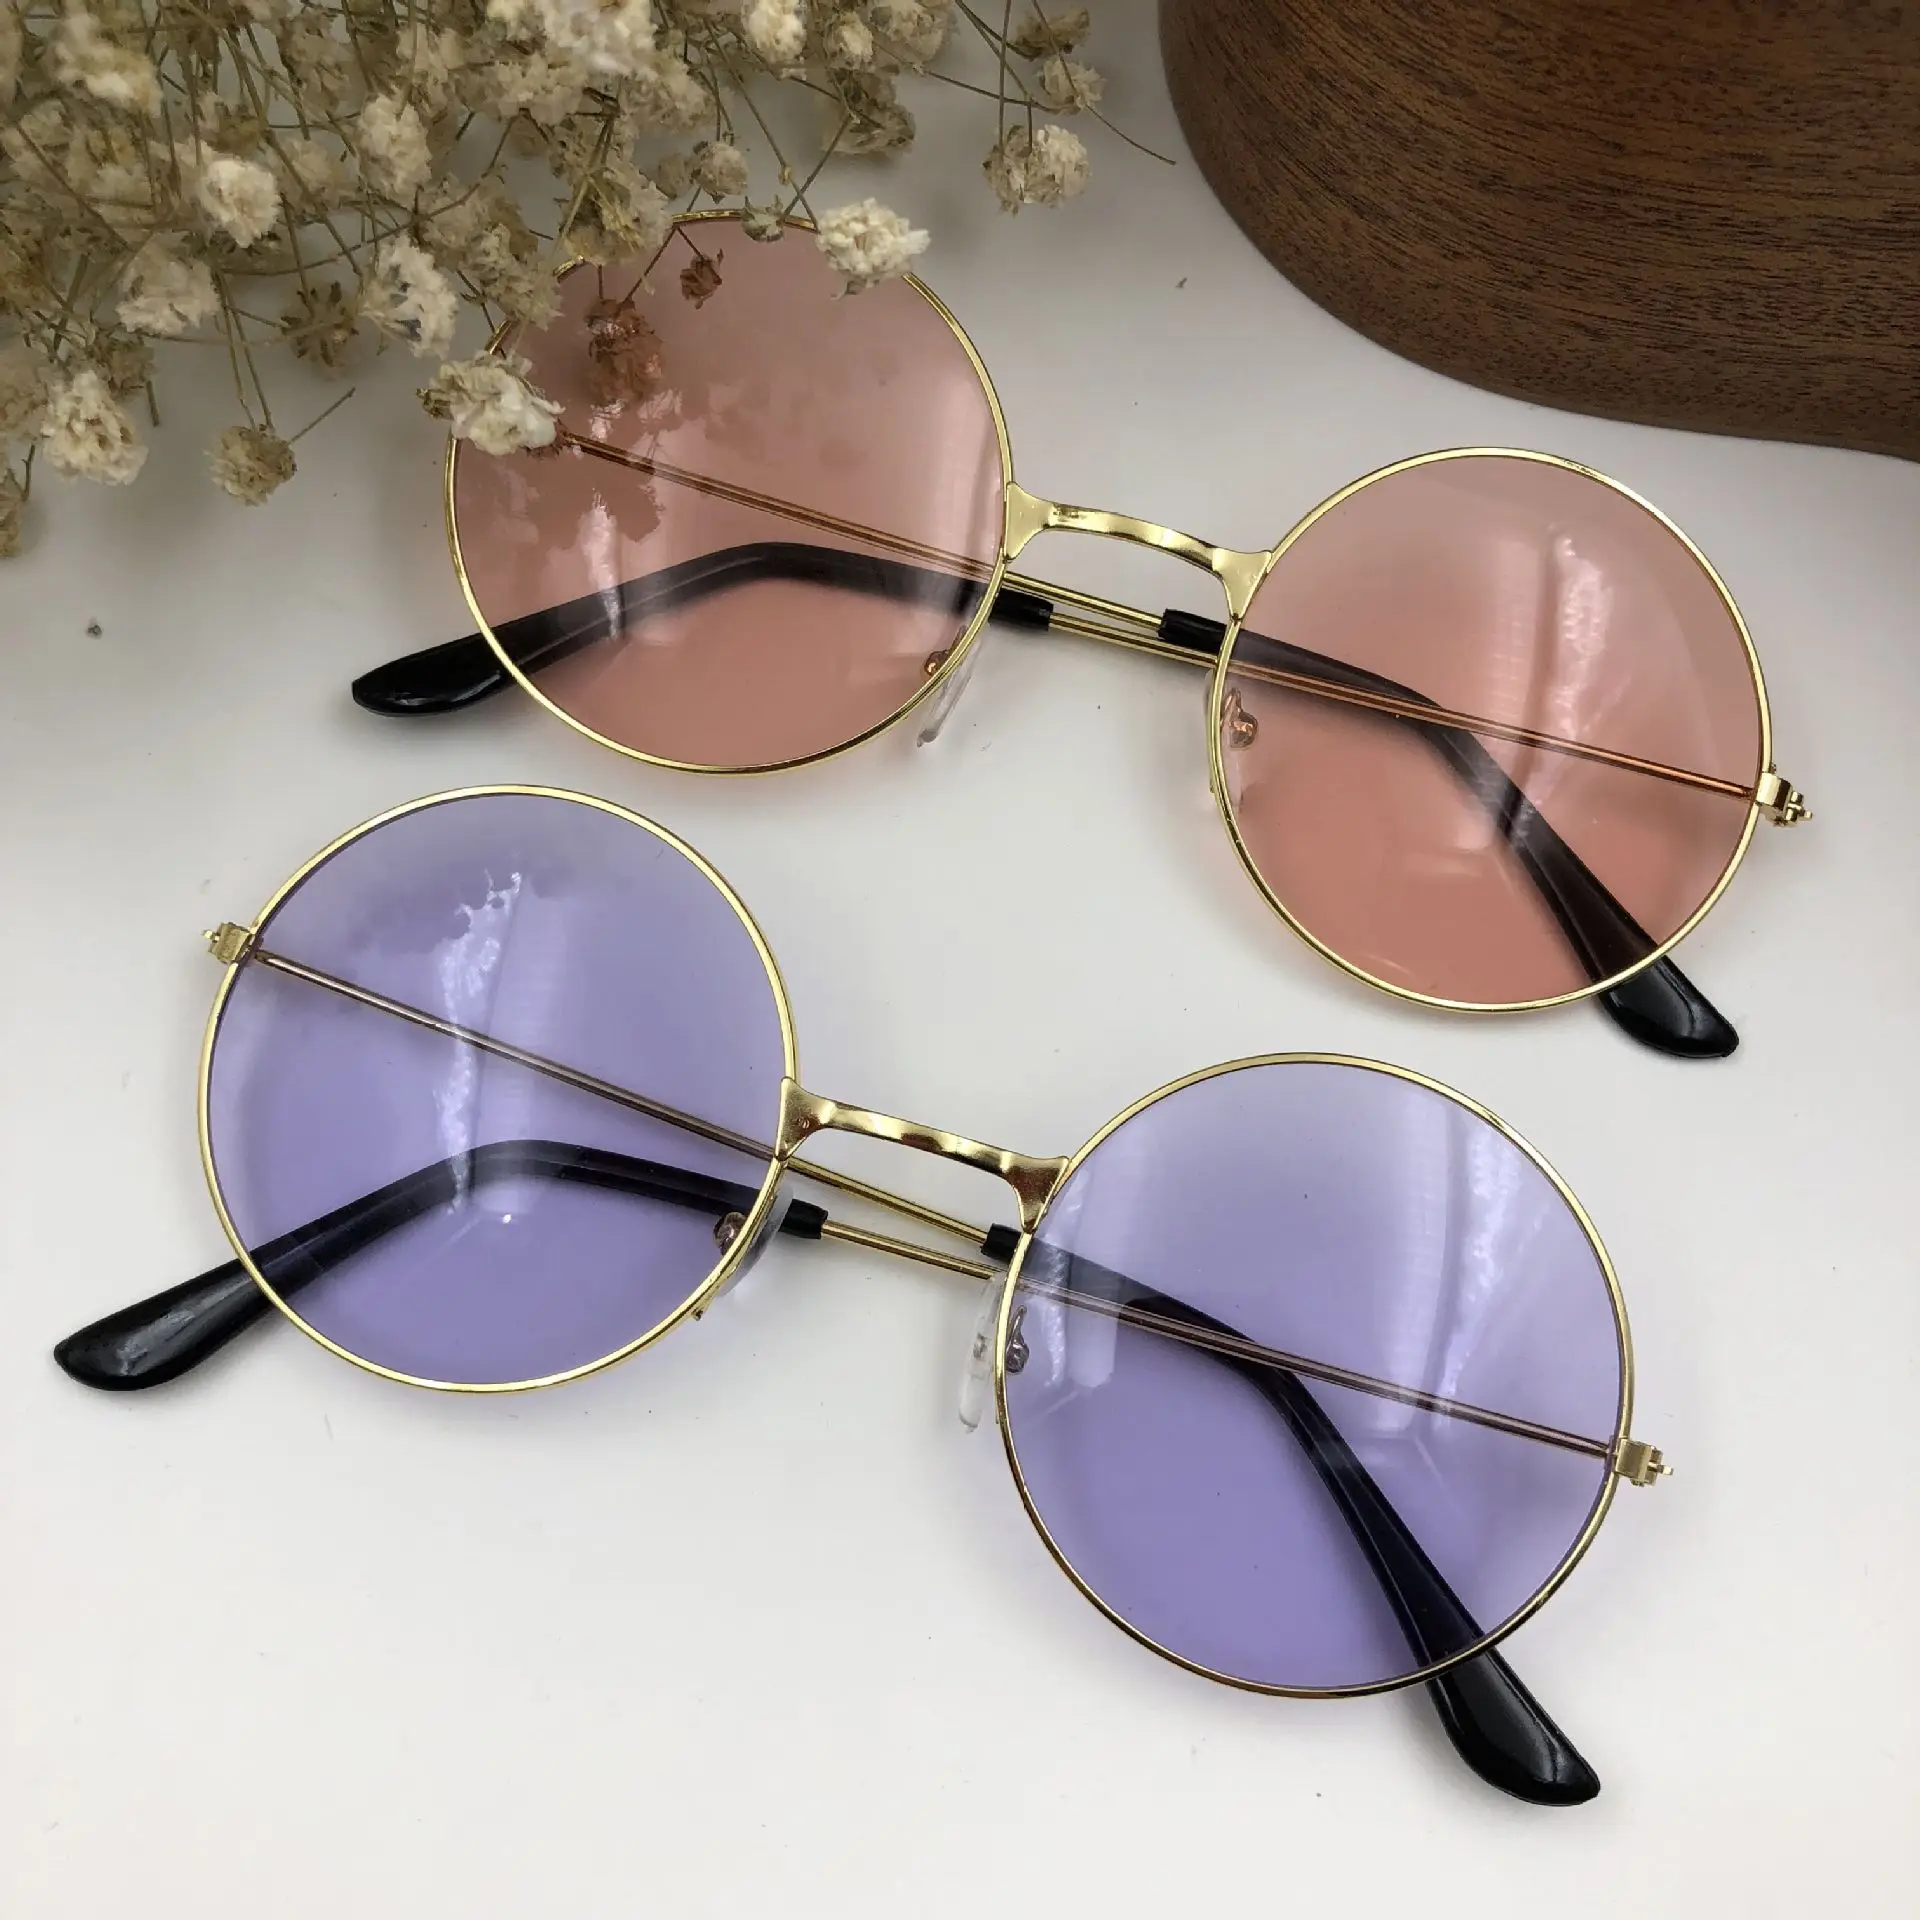 

Heiyuan New Prince Mirror Classic Round Sunglasses Transparent Progressive Ocean Piece Fashion Big Frame Glasses Report